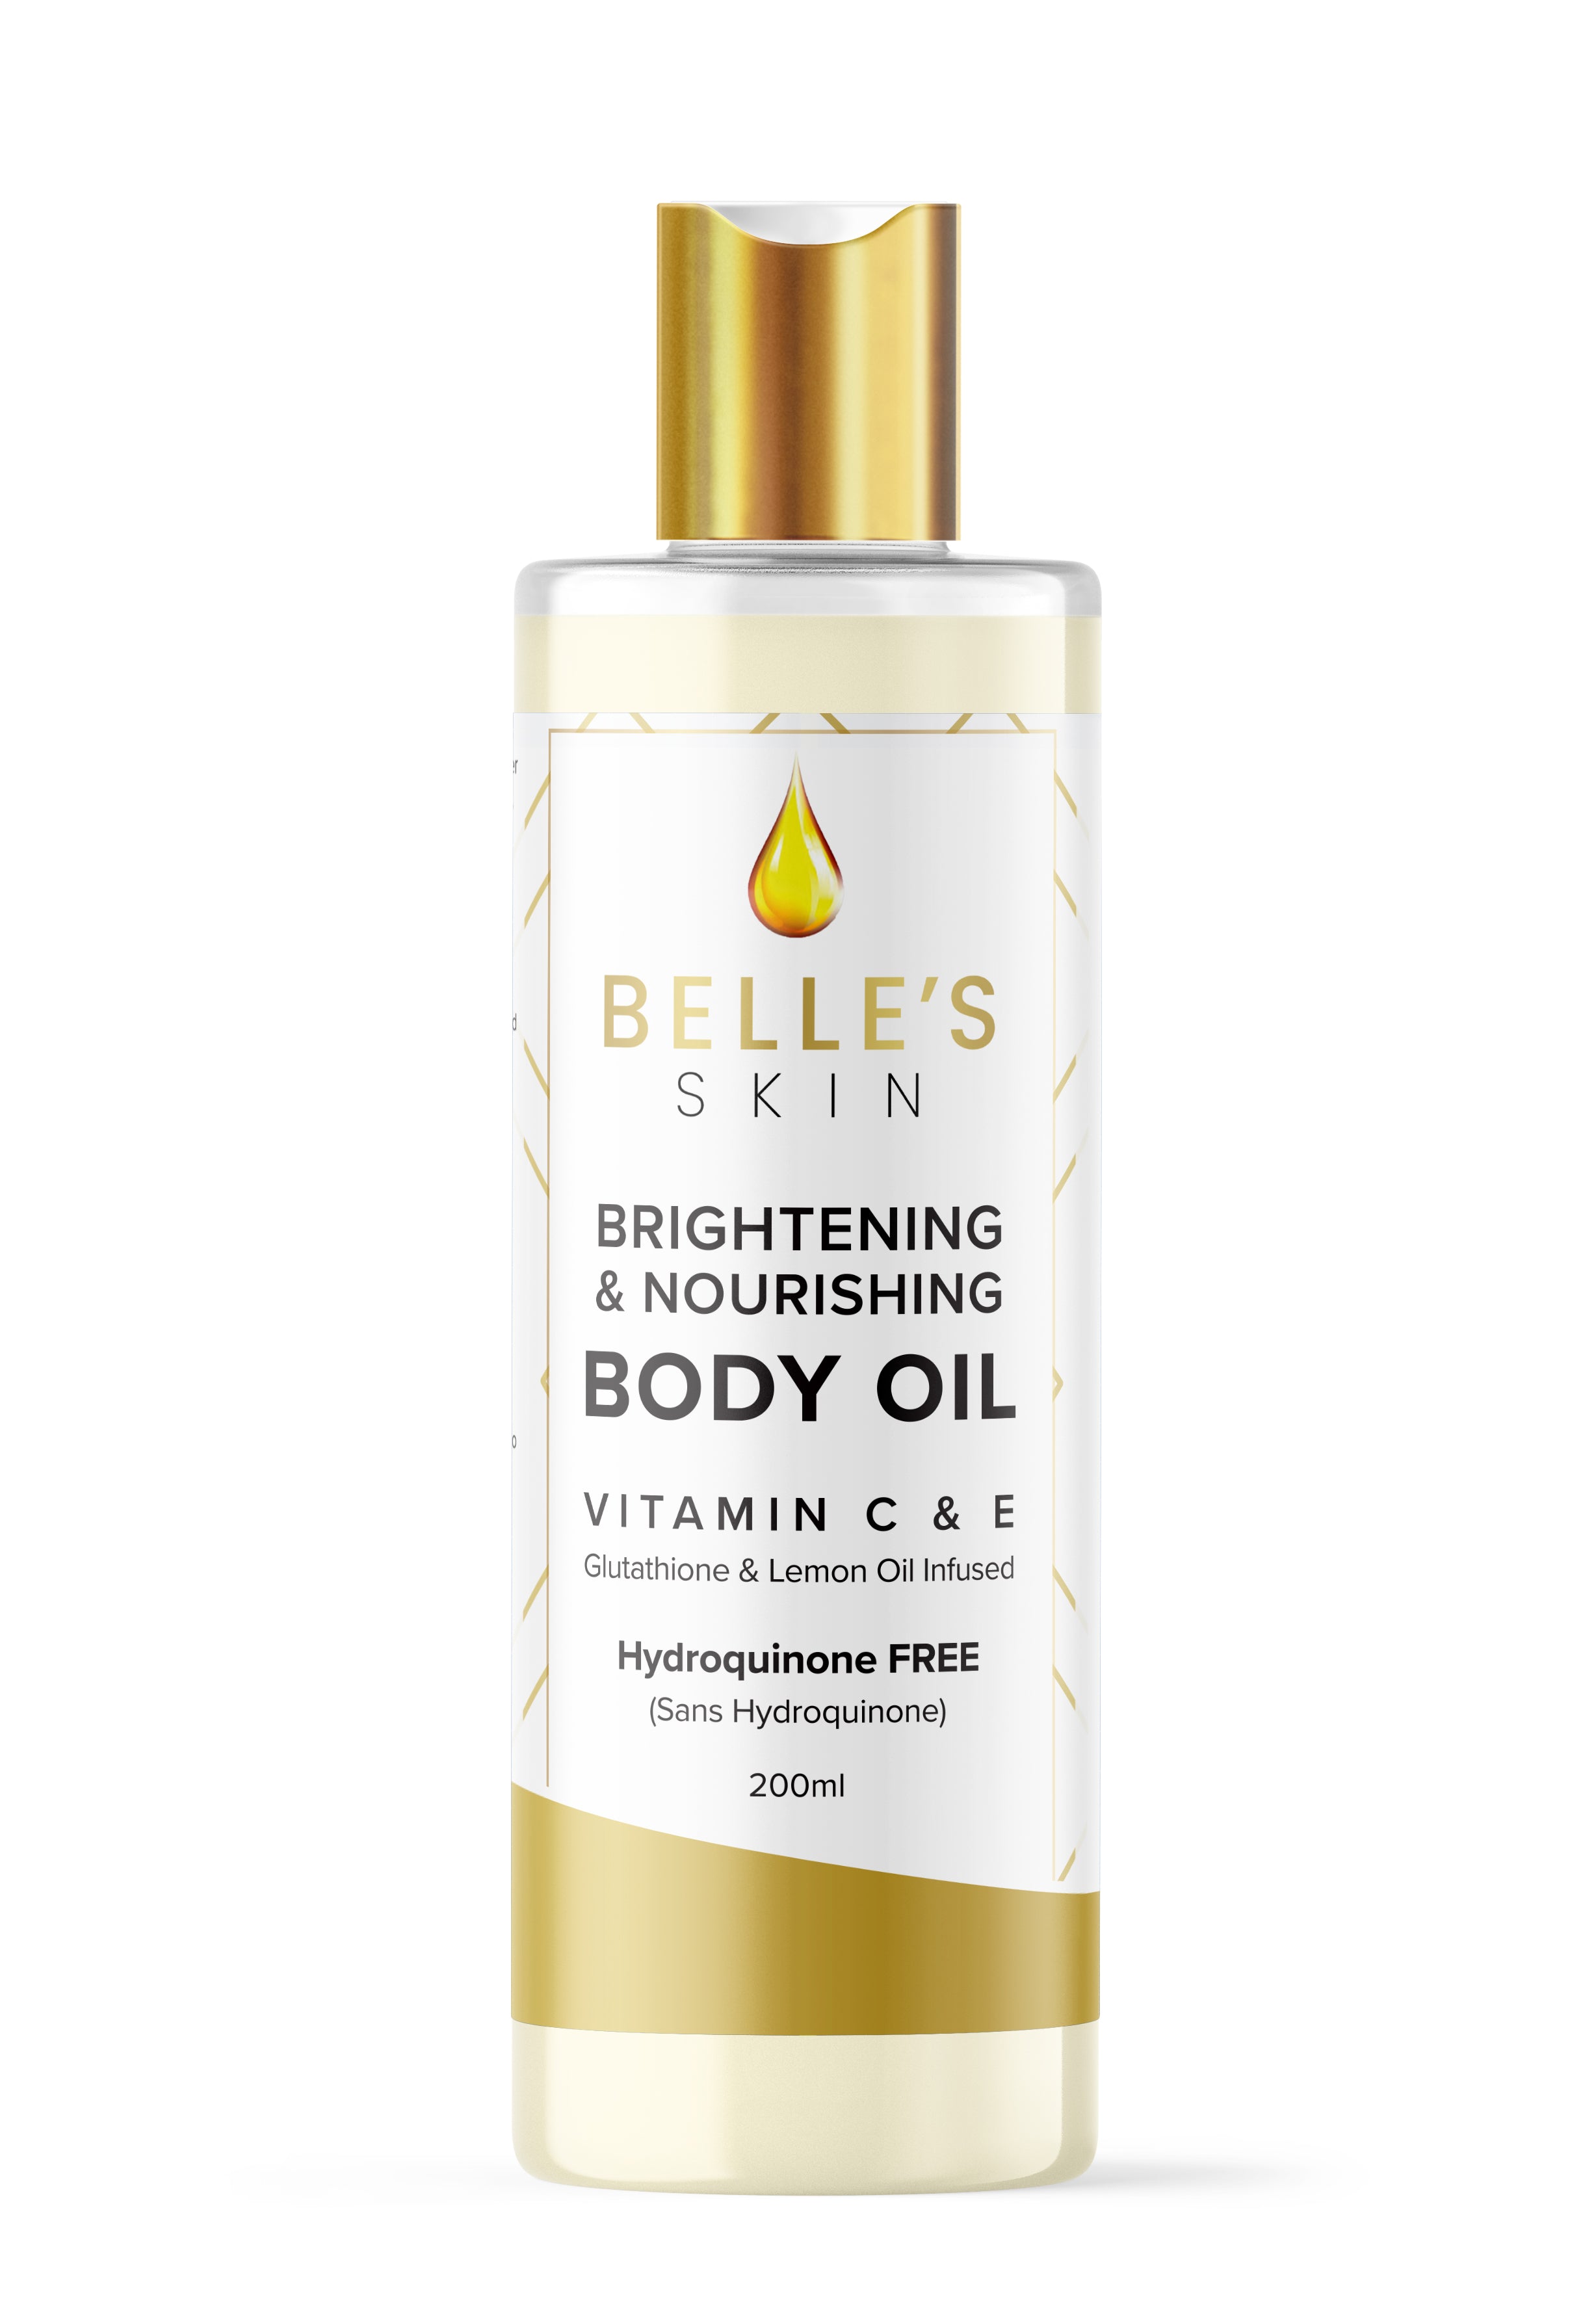 Belle's Skin Body Oil